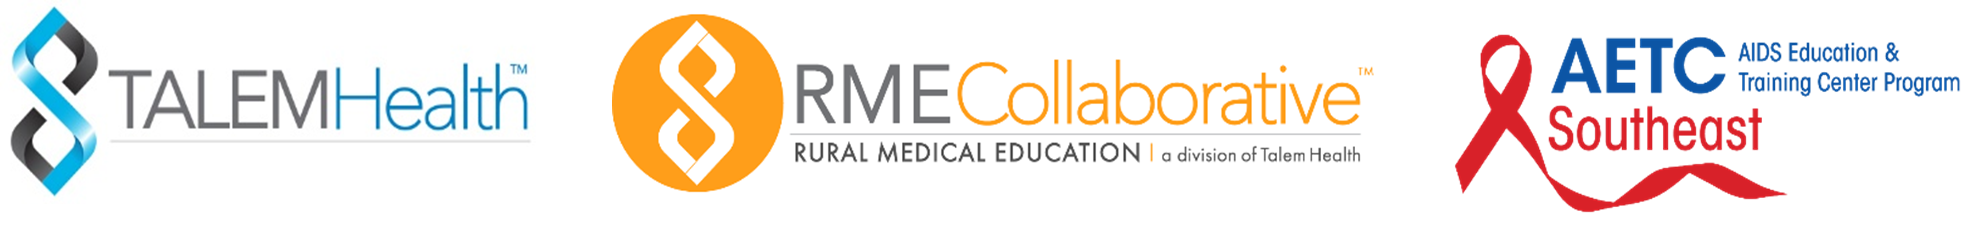 Talem Health Logo, RME Collaborative Logo, & AETC Southeast Logo